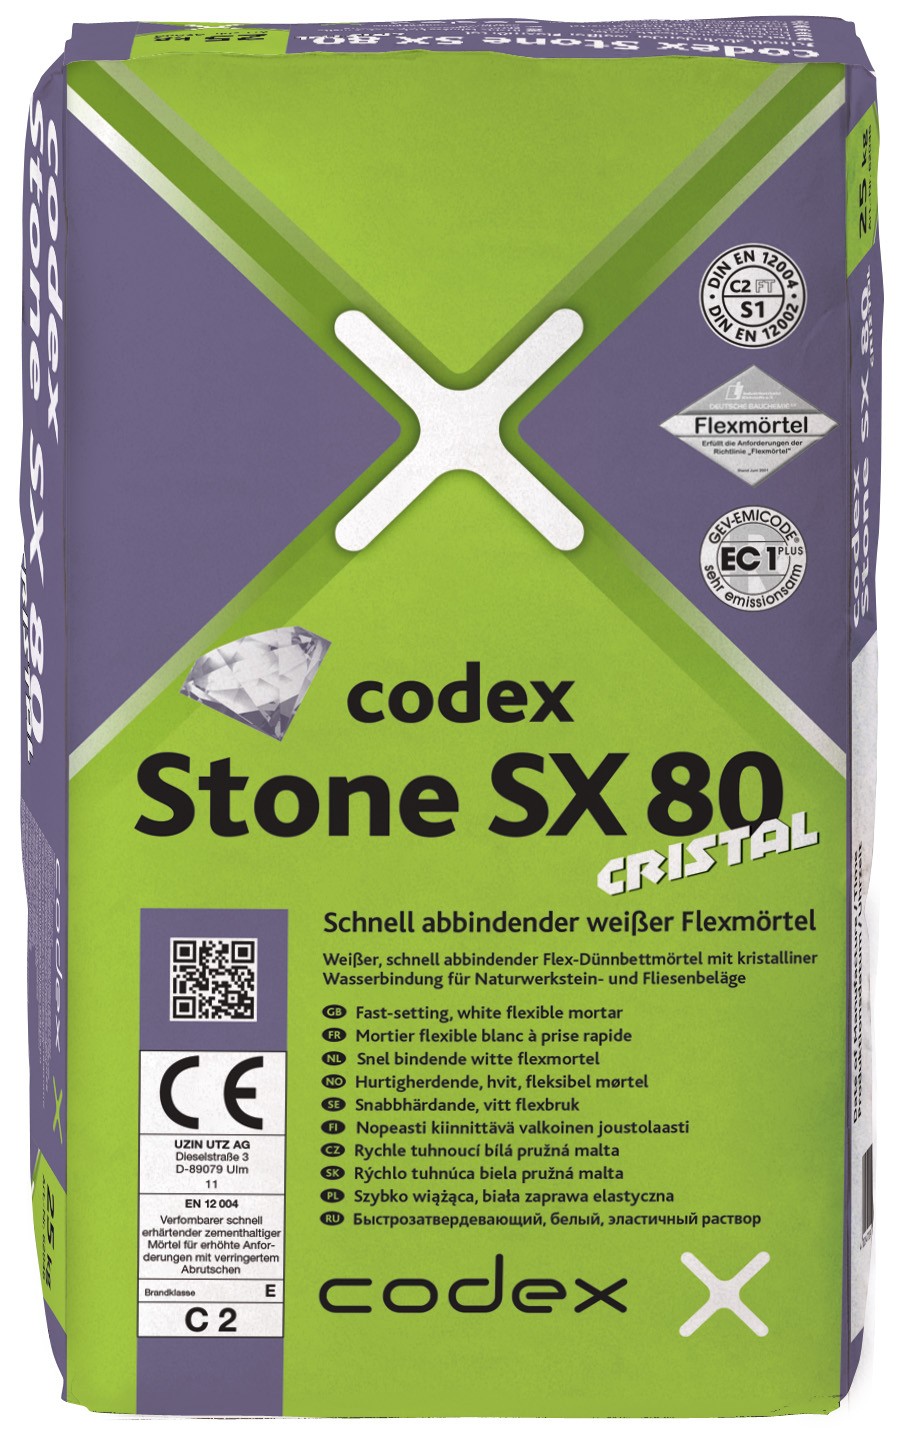 codex Stone SX 80 Cristal Flex-Dünnbettmörtel weiß - 5kg 